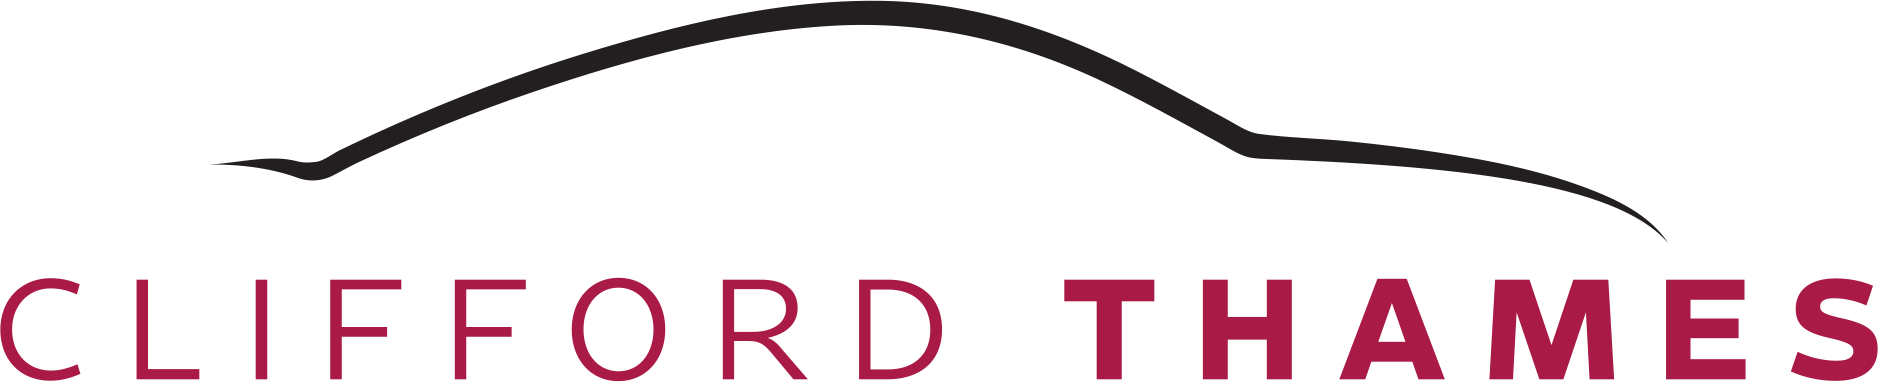 Clifford Thames logo